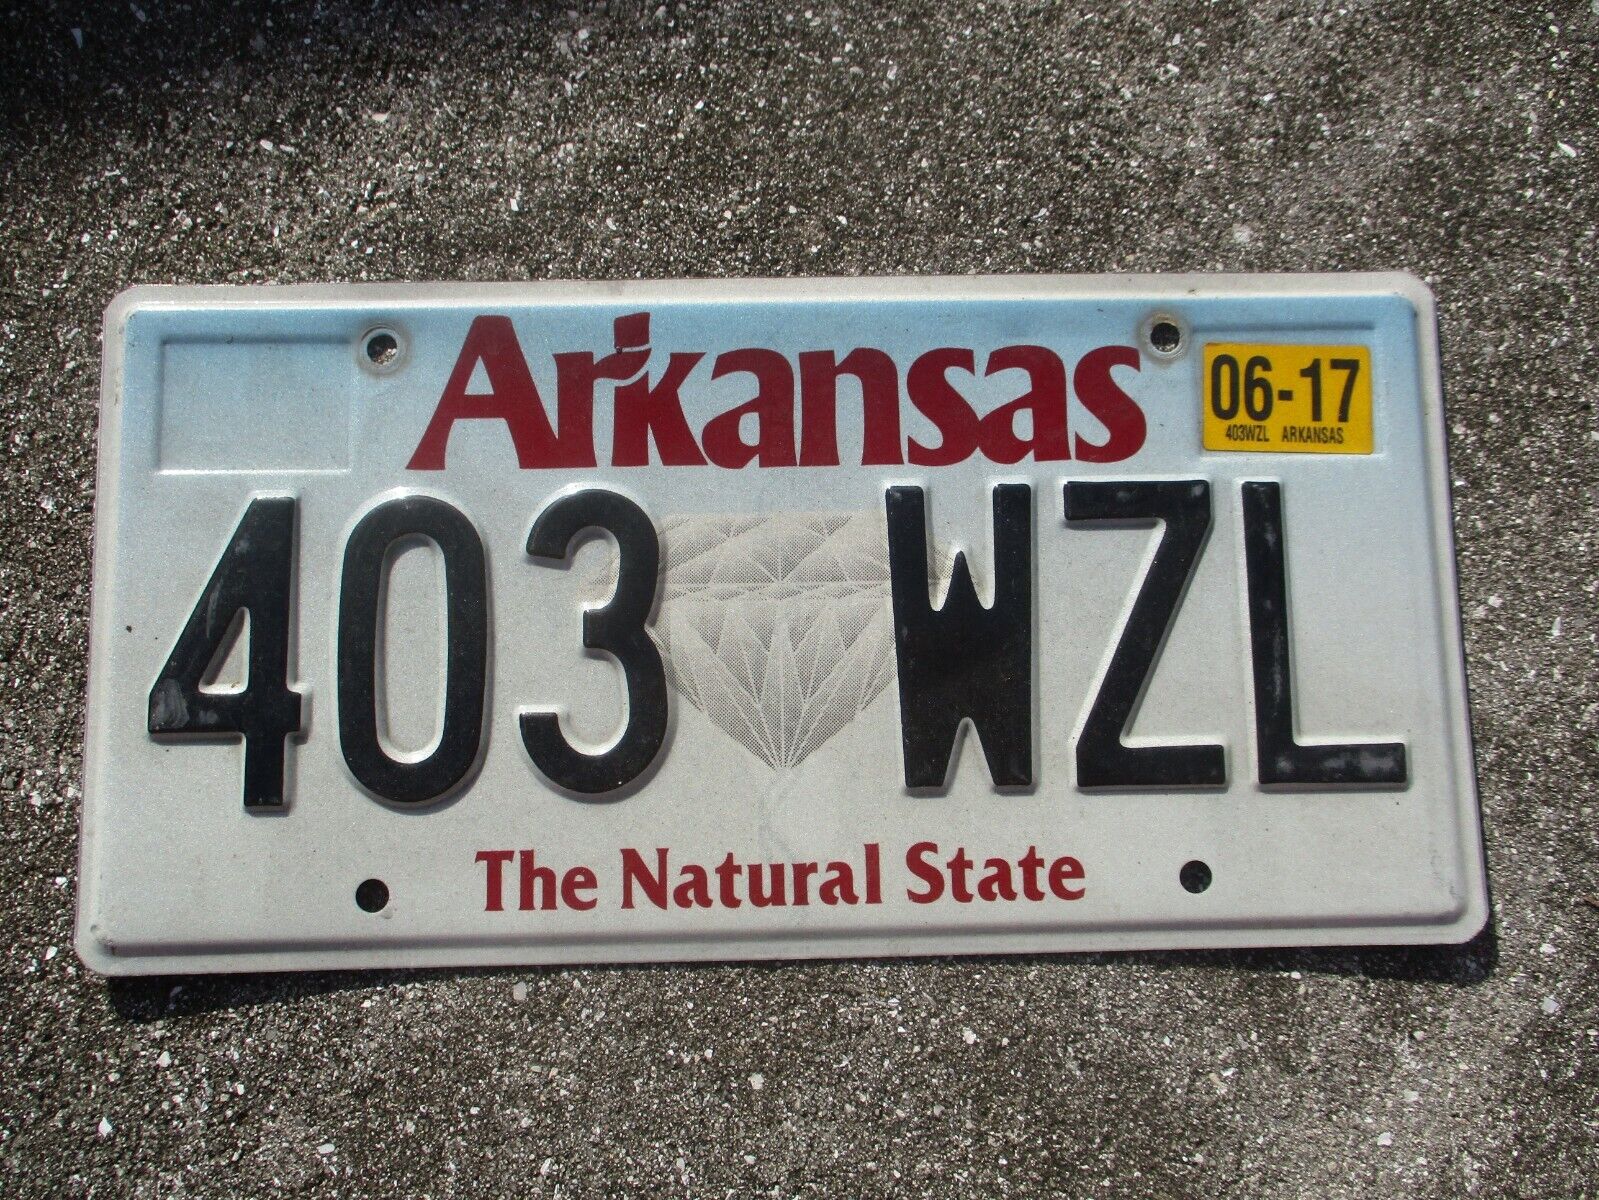 Arkansas Diamond   license plate #    403  WZL